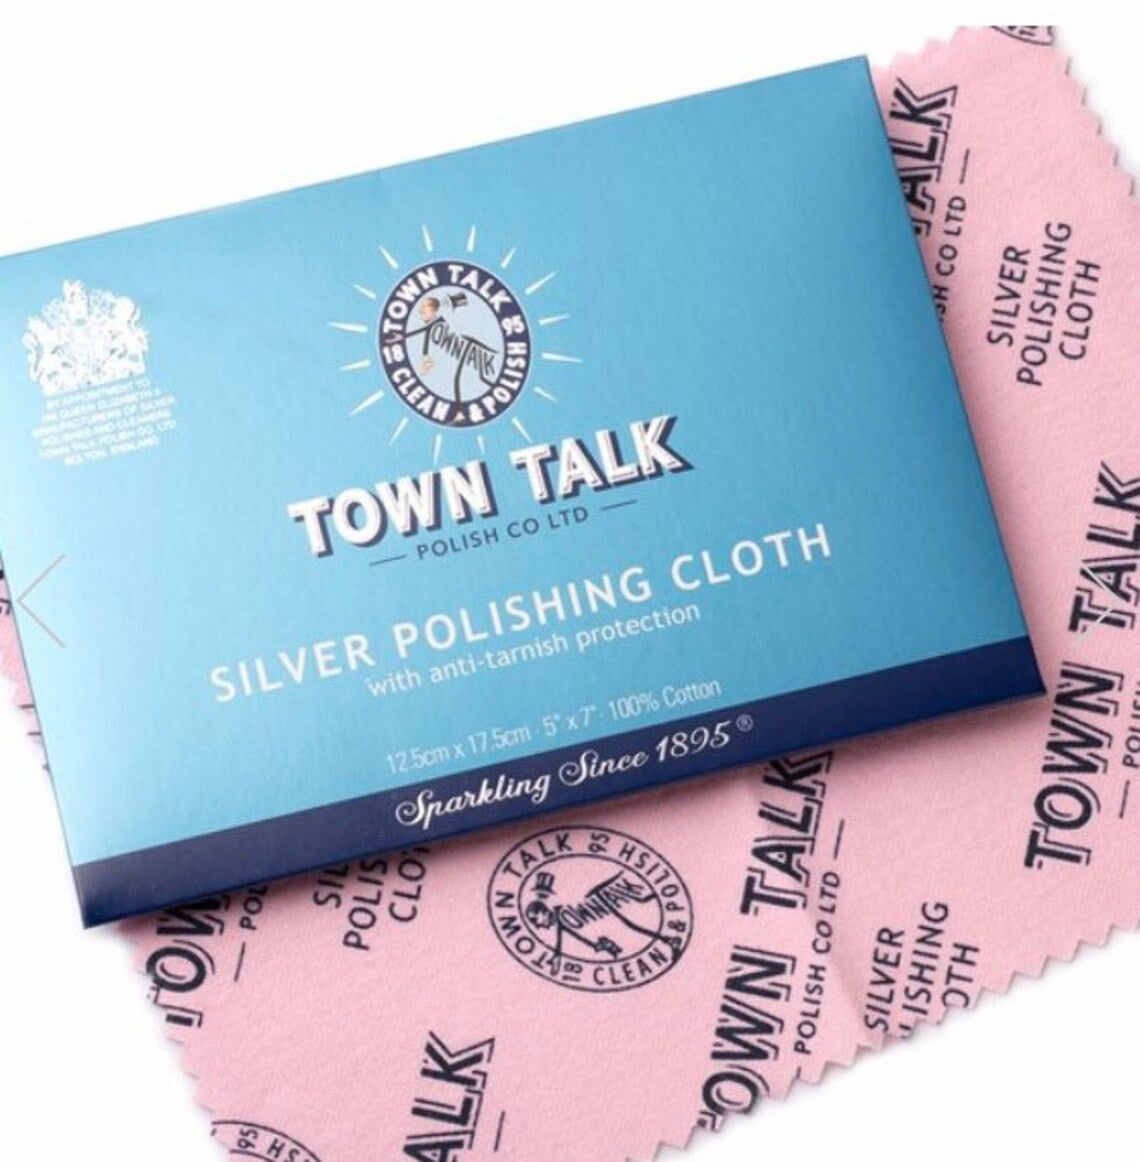 Town Talk Silver Polishing Cloth - 30cm x 45cm.